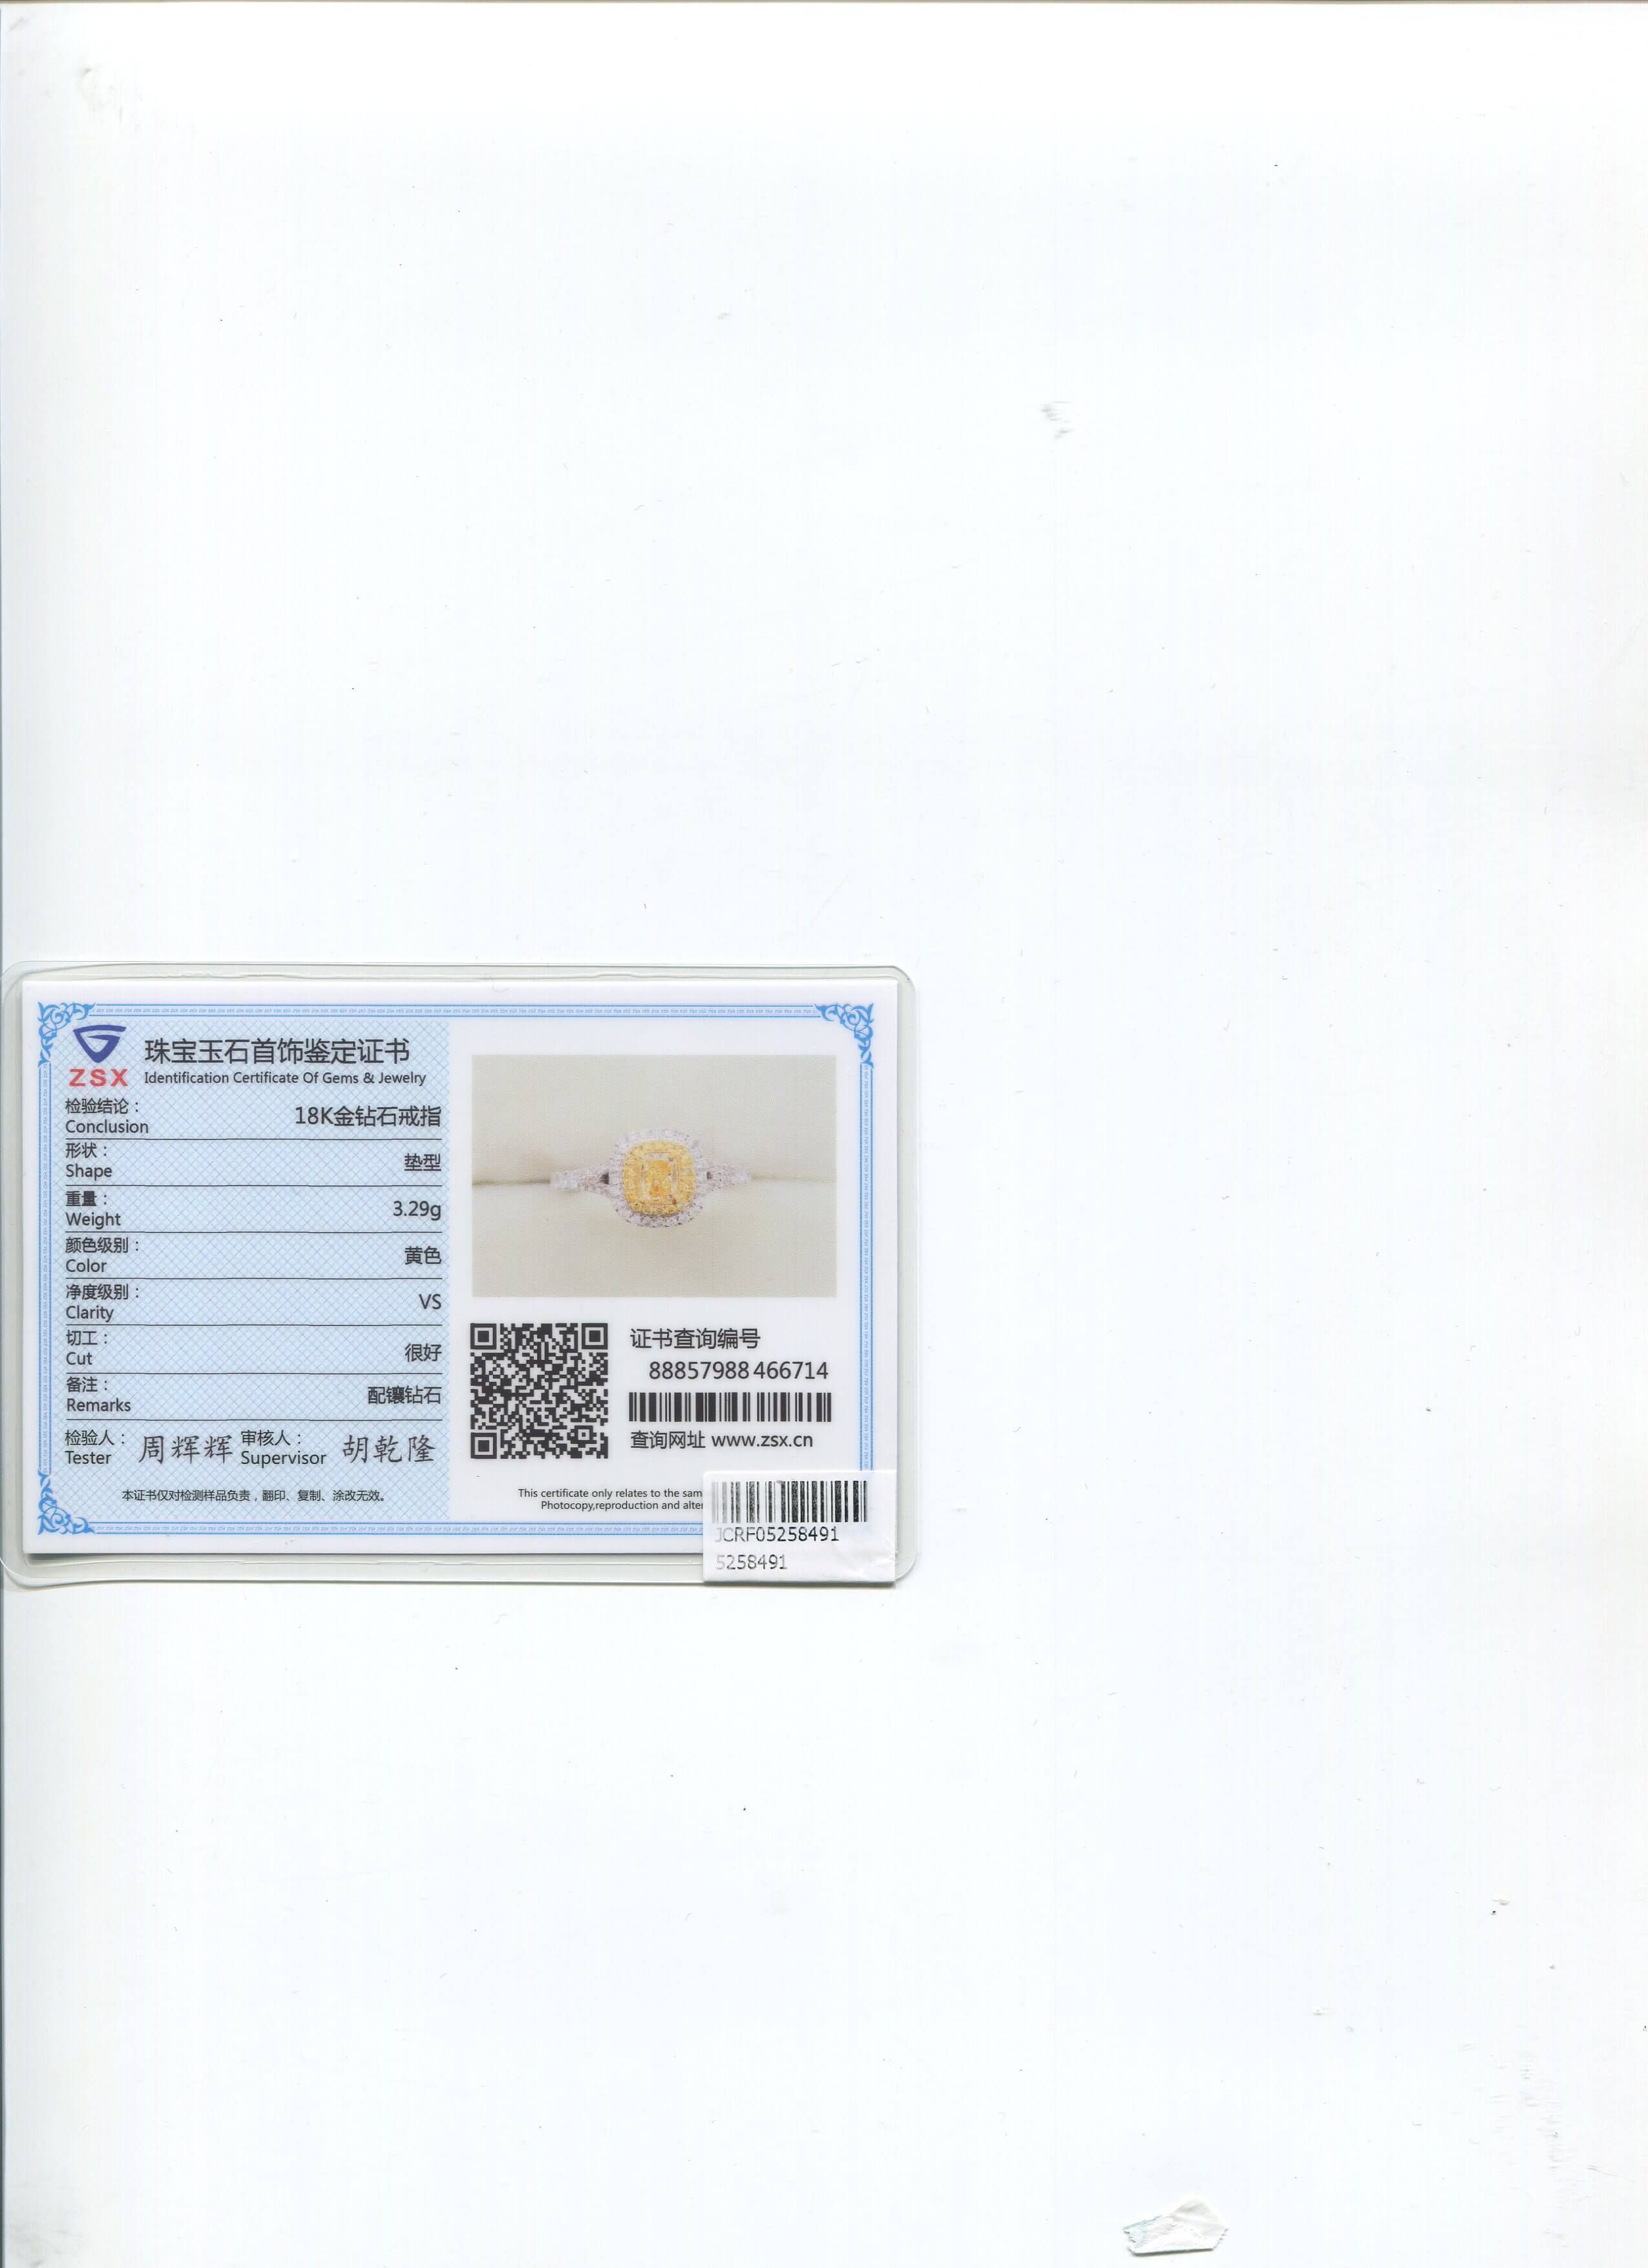 Fancy Yellow Diamond Ring, 0.58 Ct. (1.06 Ct. TW), Mix shape, ZSX Certified, 88857988466714